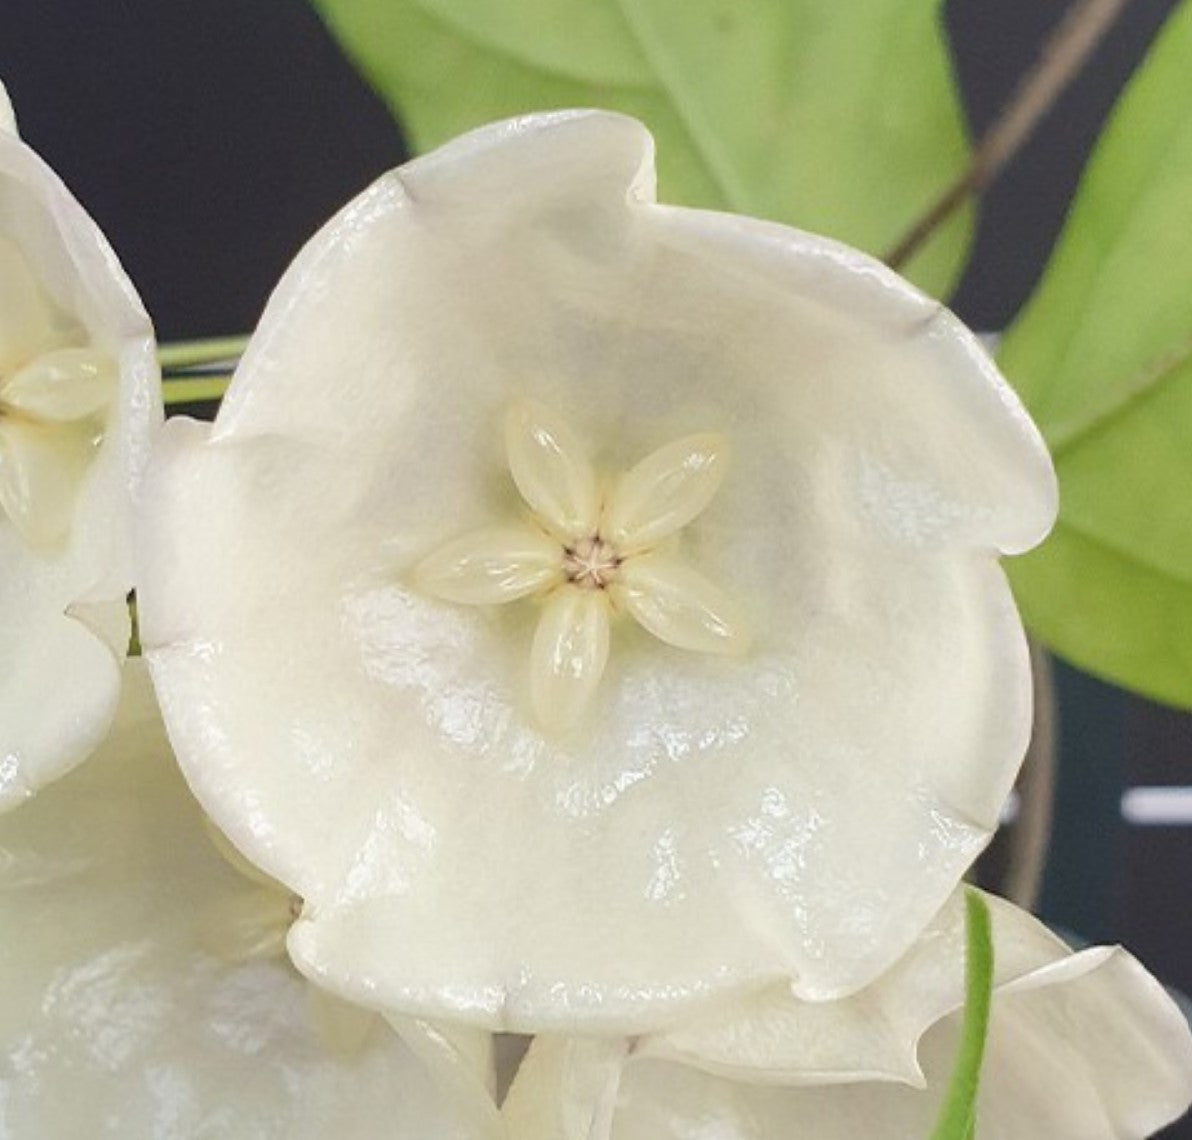 Hoya danumensis - Dr. Bill's Orchids, LLC